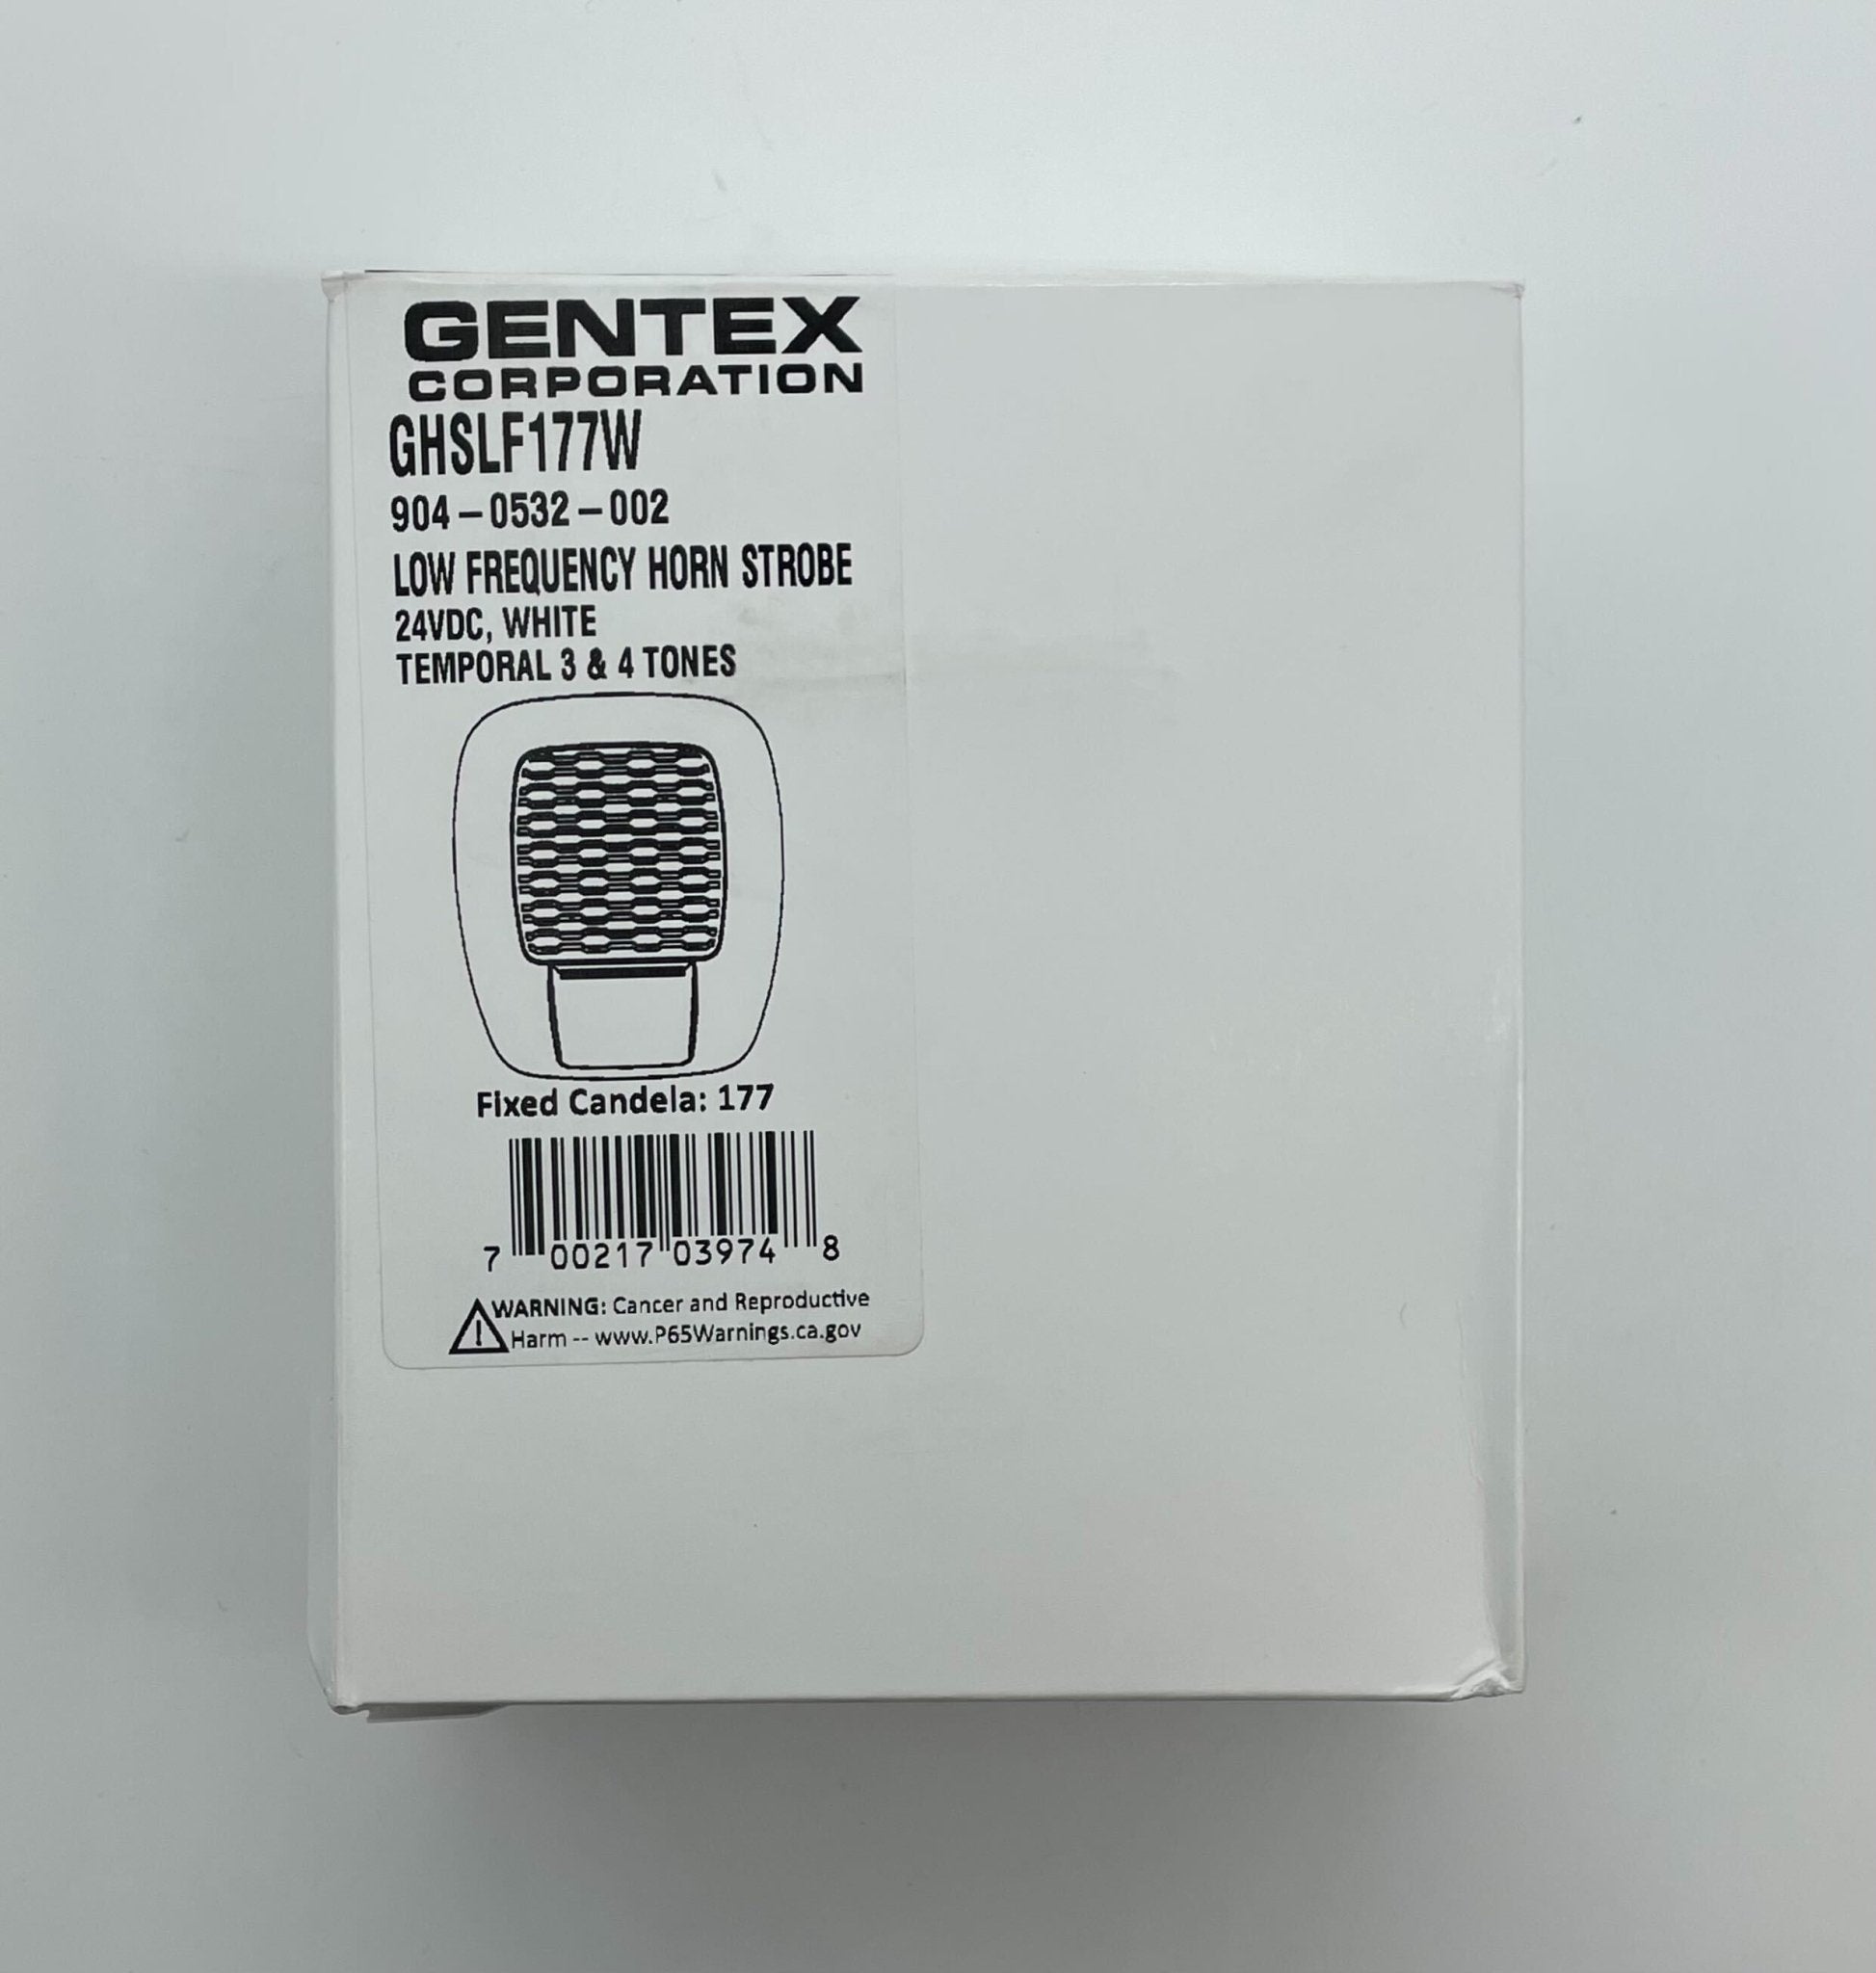 Gentex GHSLF177W - The Fire Alarm Supplier